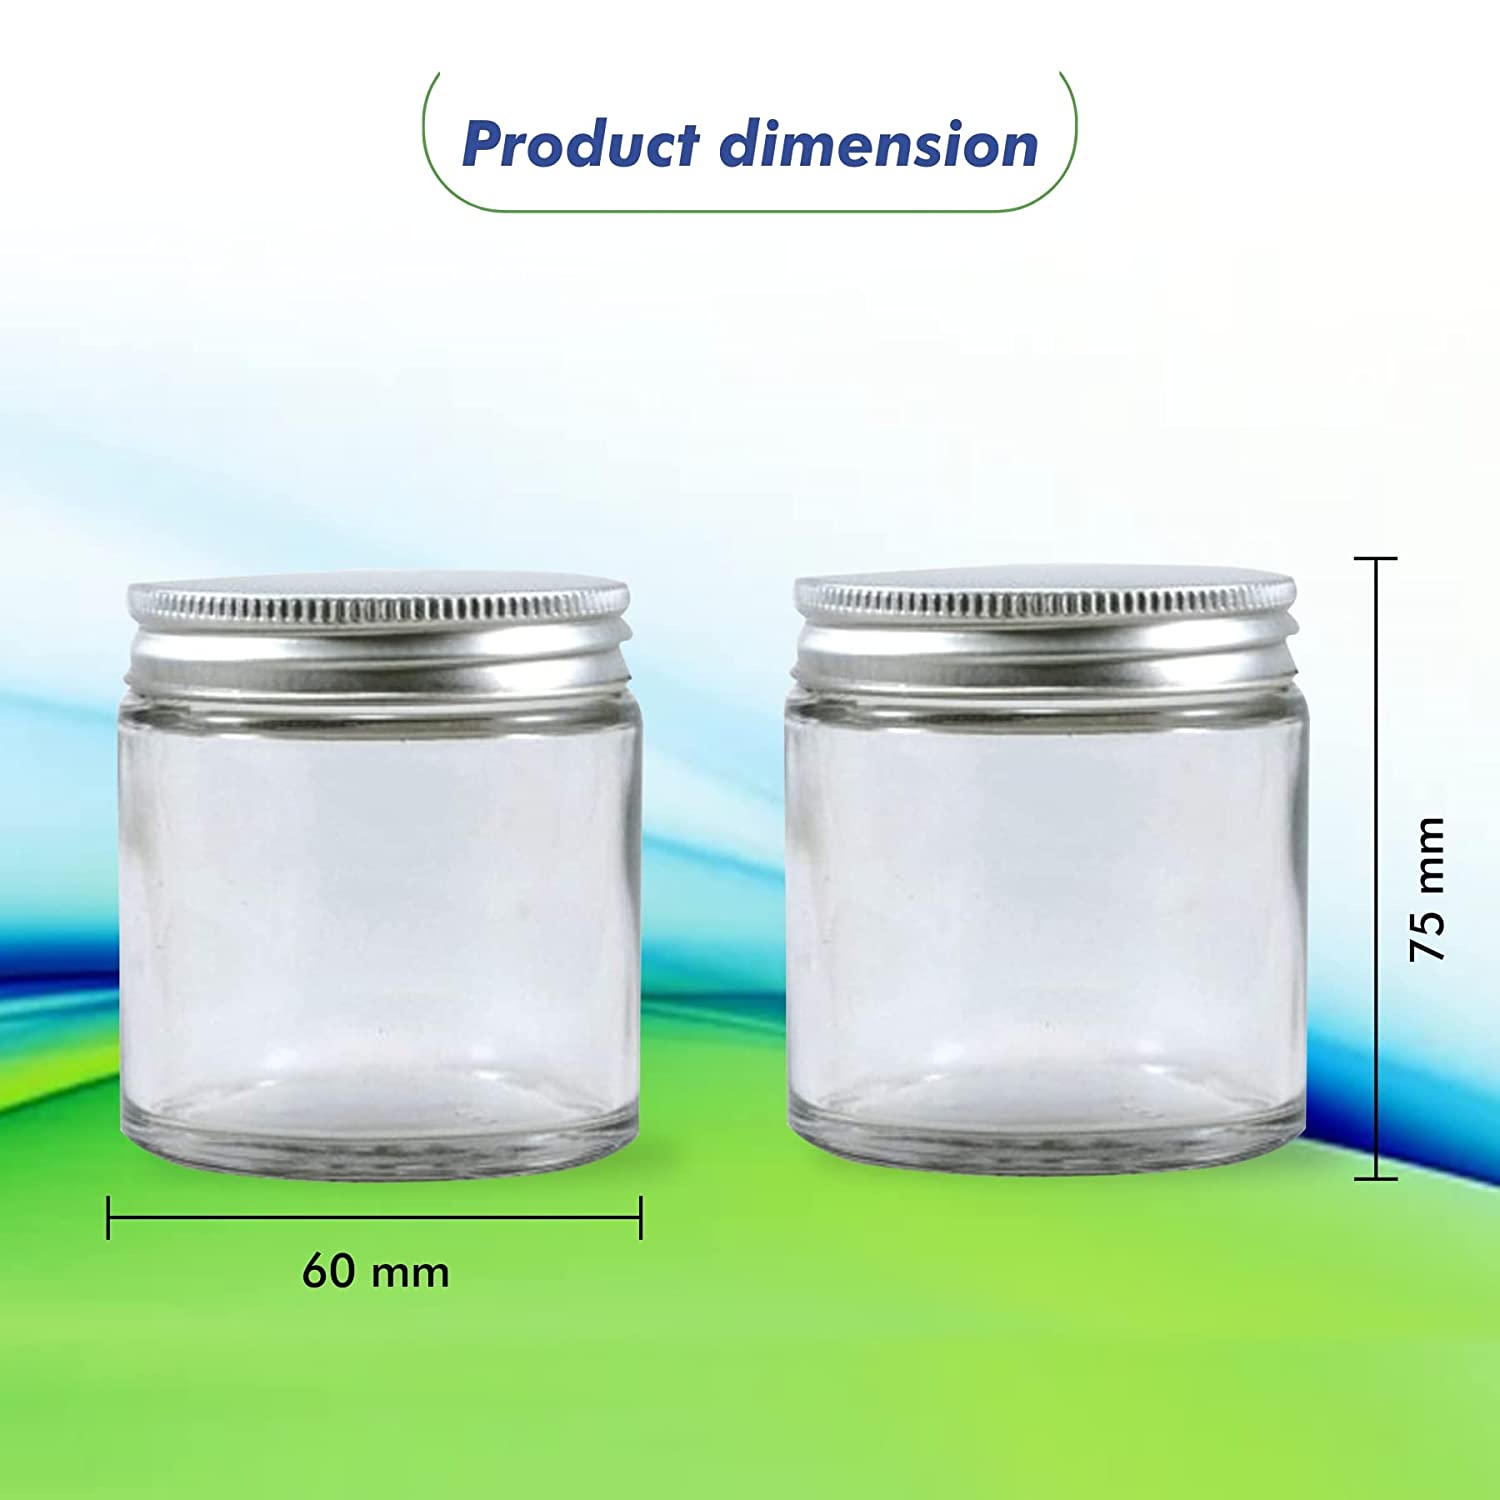 Shoprythm Packaging,Cosmetic Jar Glass jar with Golden lid